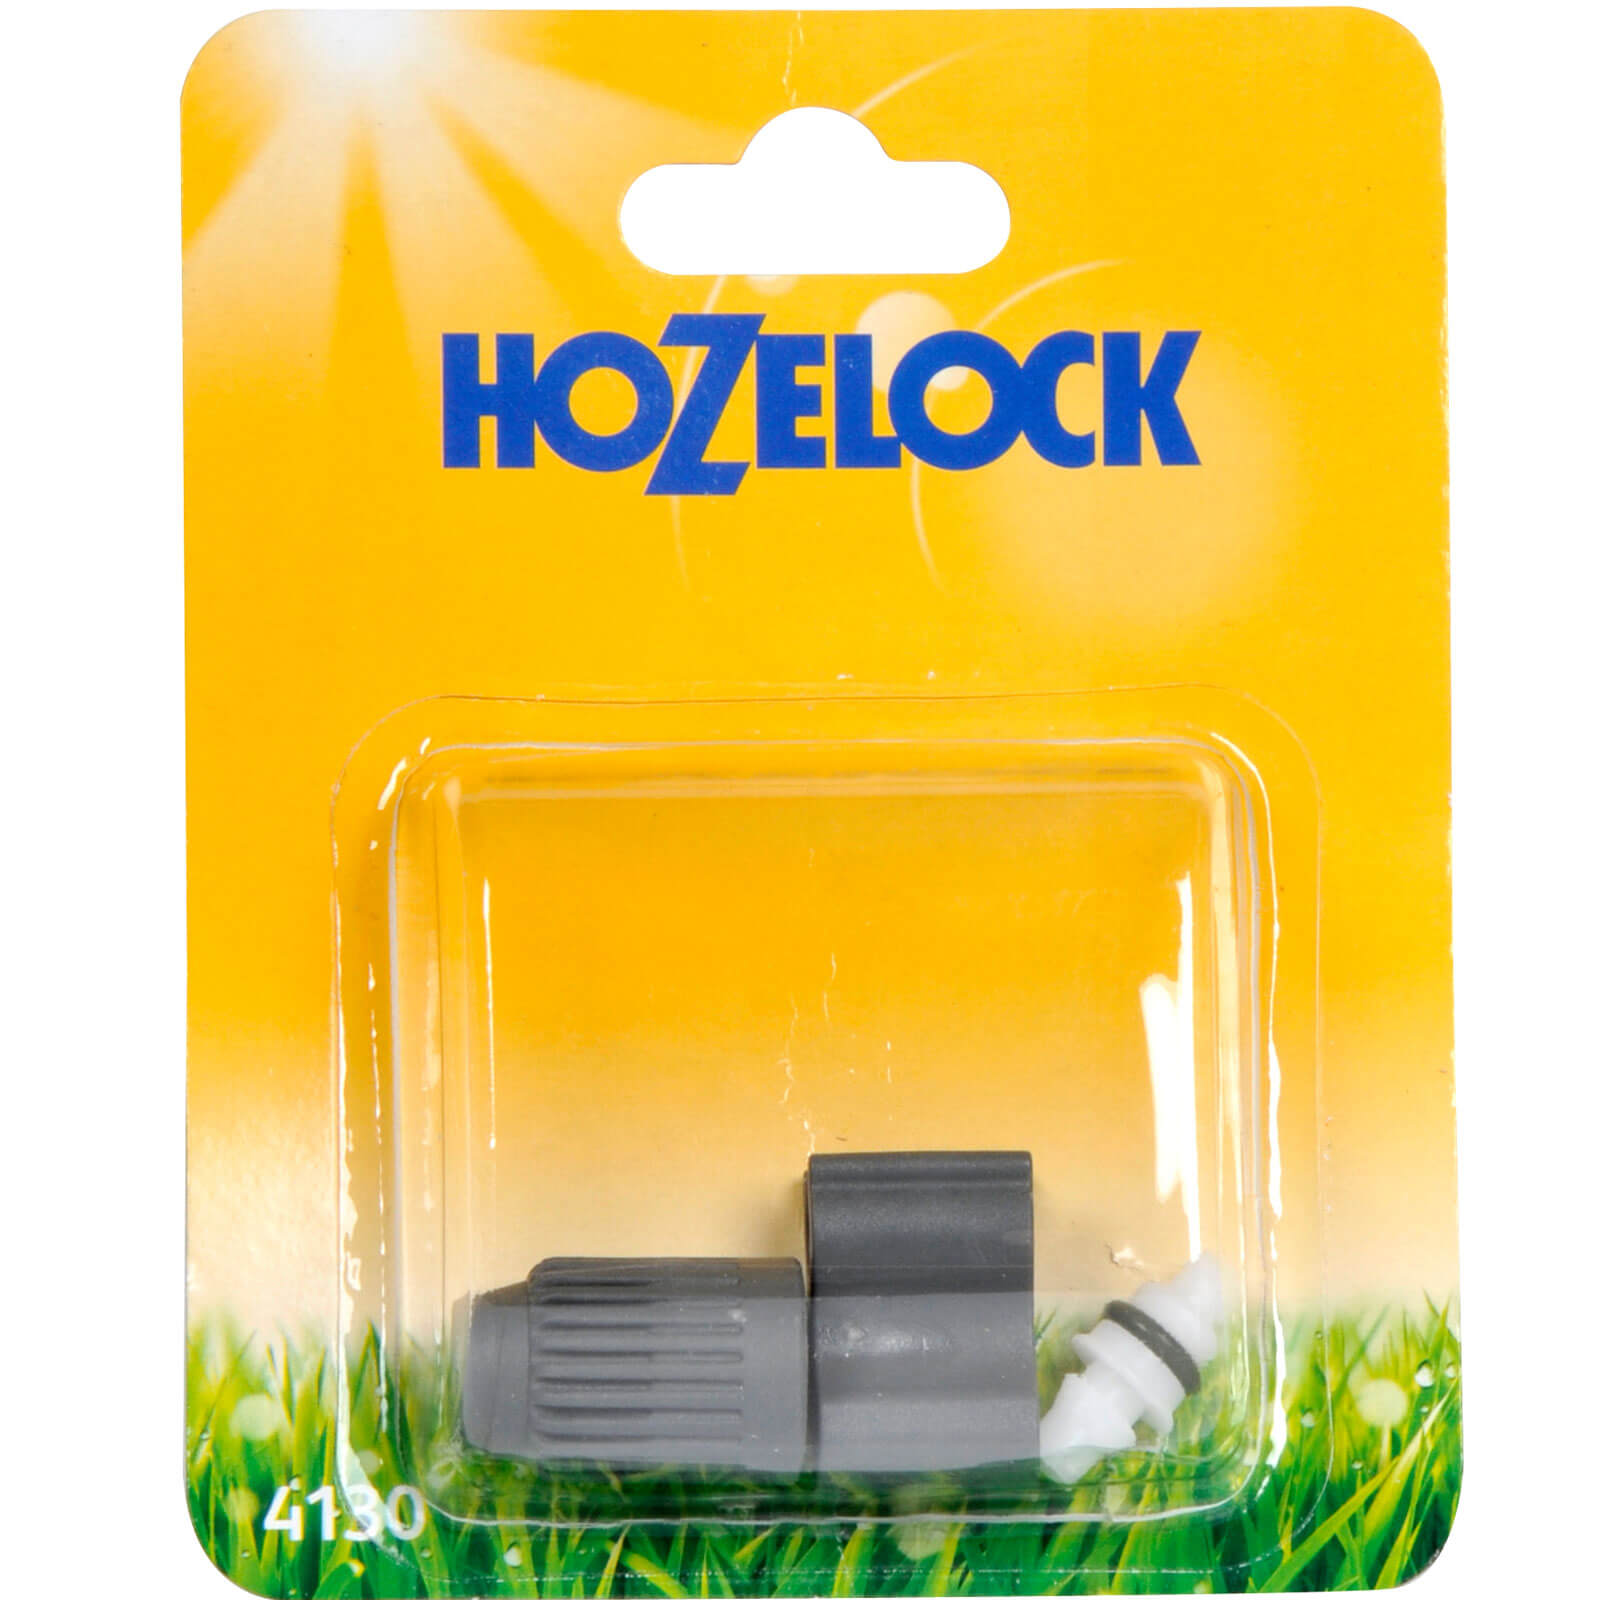 Image of Hozelock Outlet Kit for Standard Pressure Sprayers